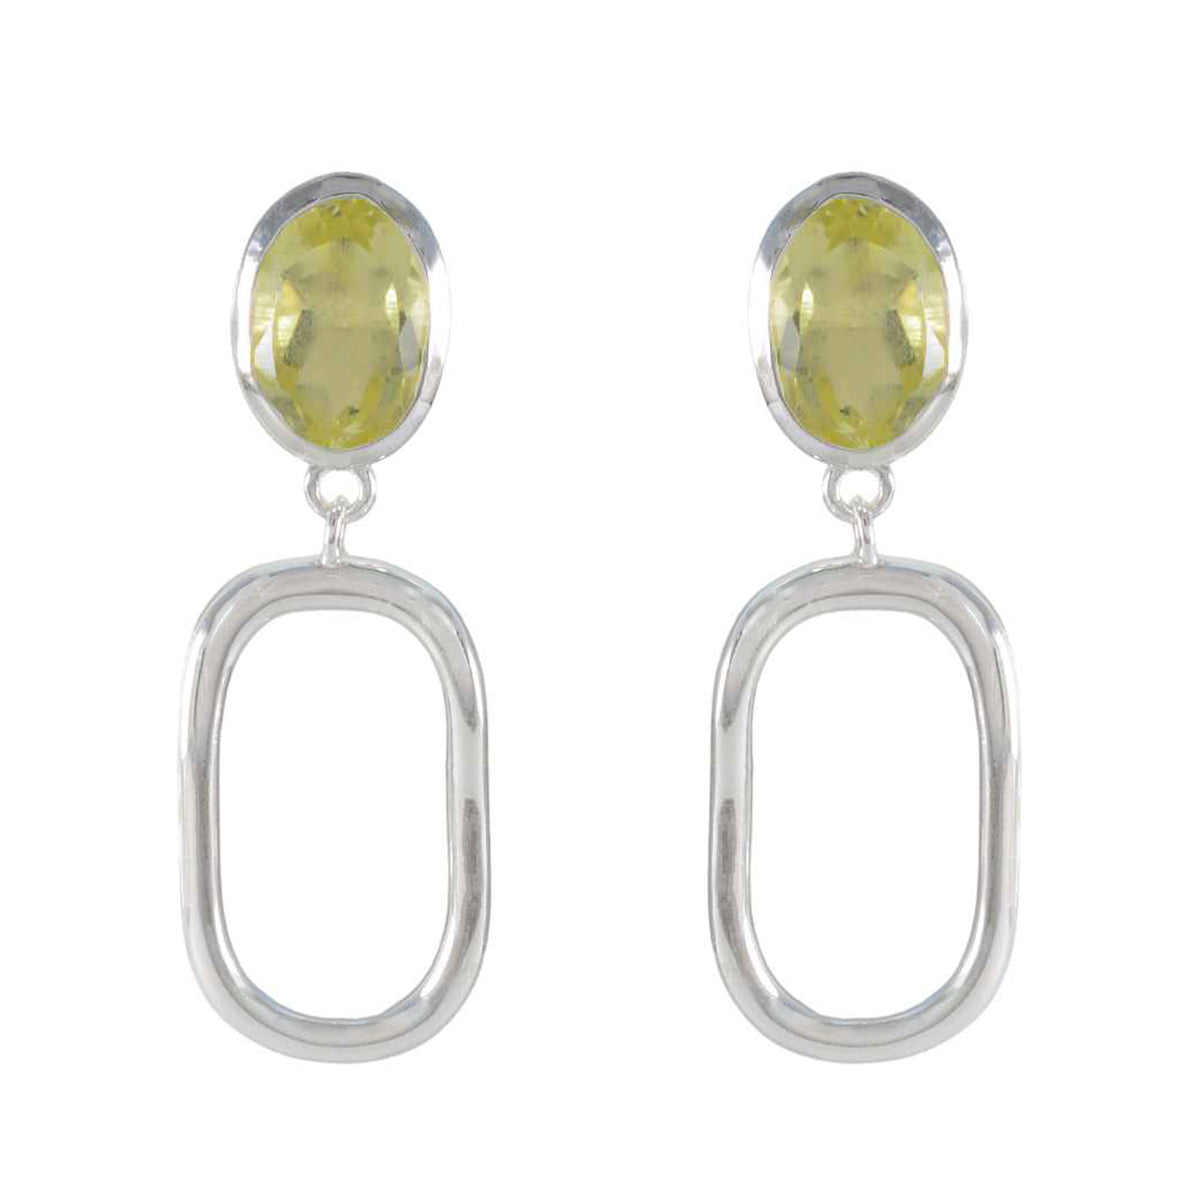 Riyo Delightful 925 Sterling Silver Earring For Women Lemon Quartz Earring Bezel Setting Yellow Earring Stud Earring